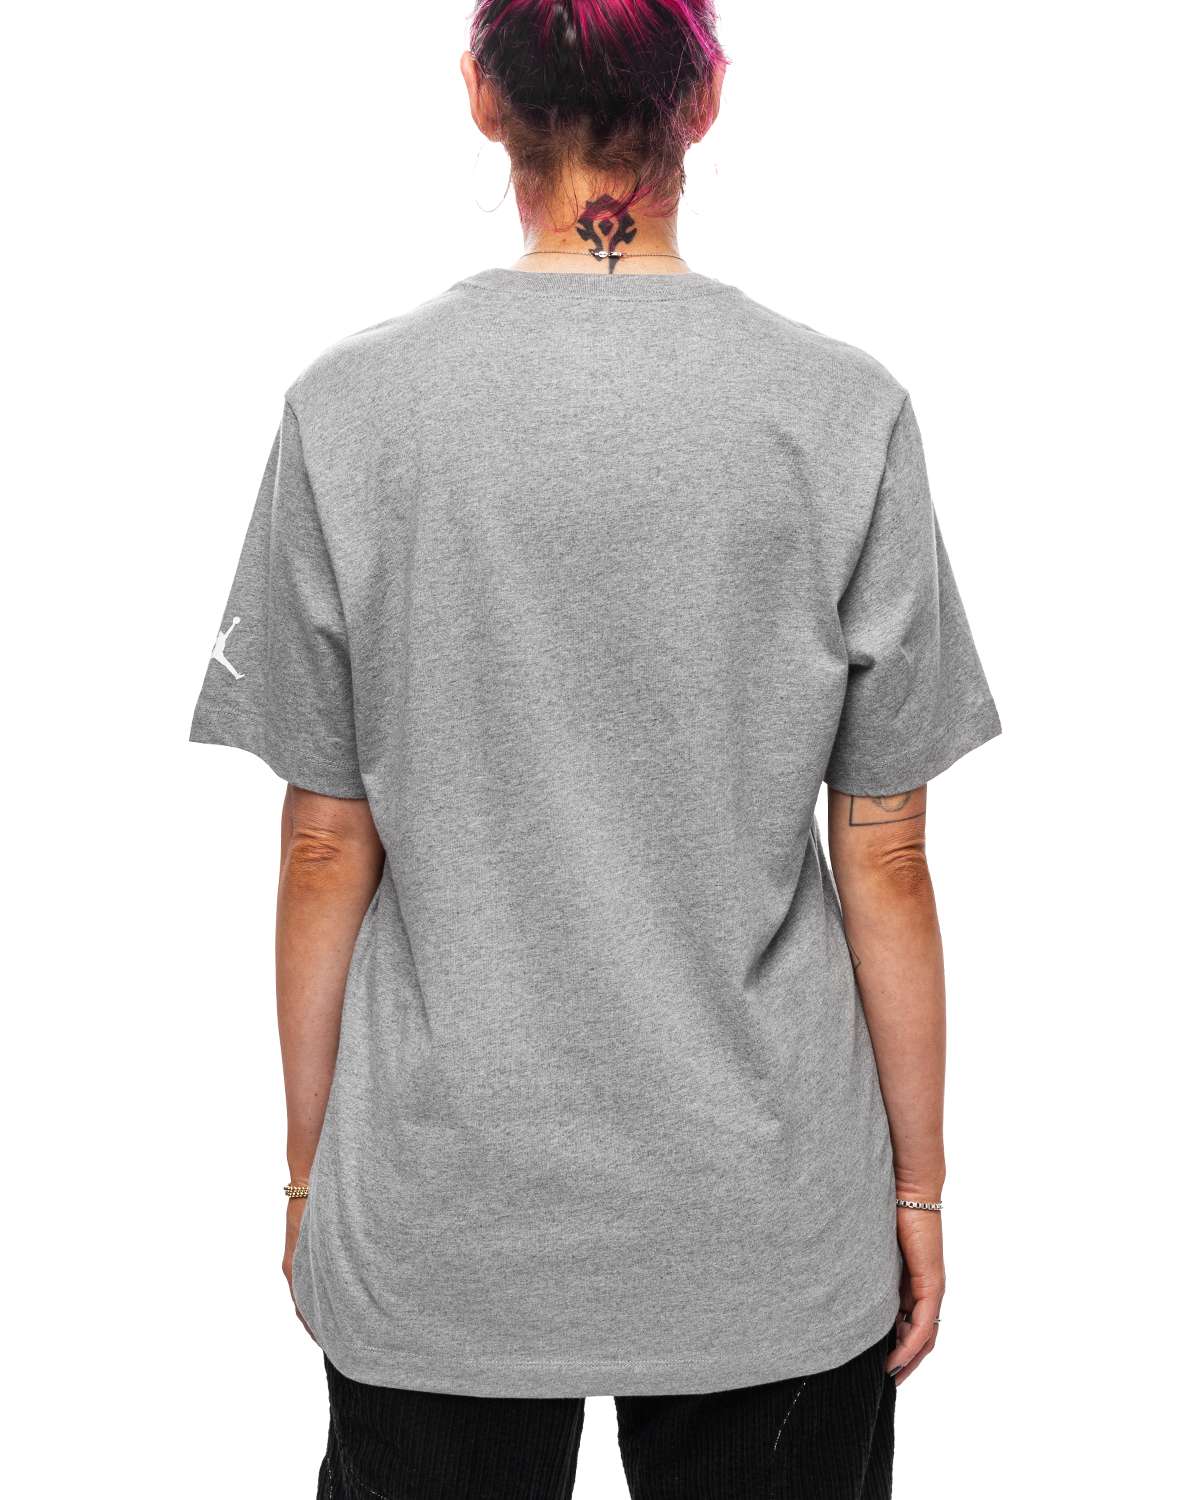 Brand T-Shirt Carbon Heather/White